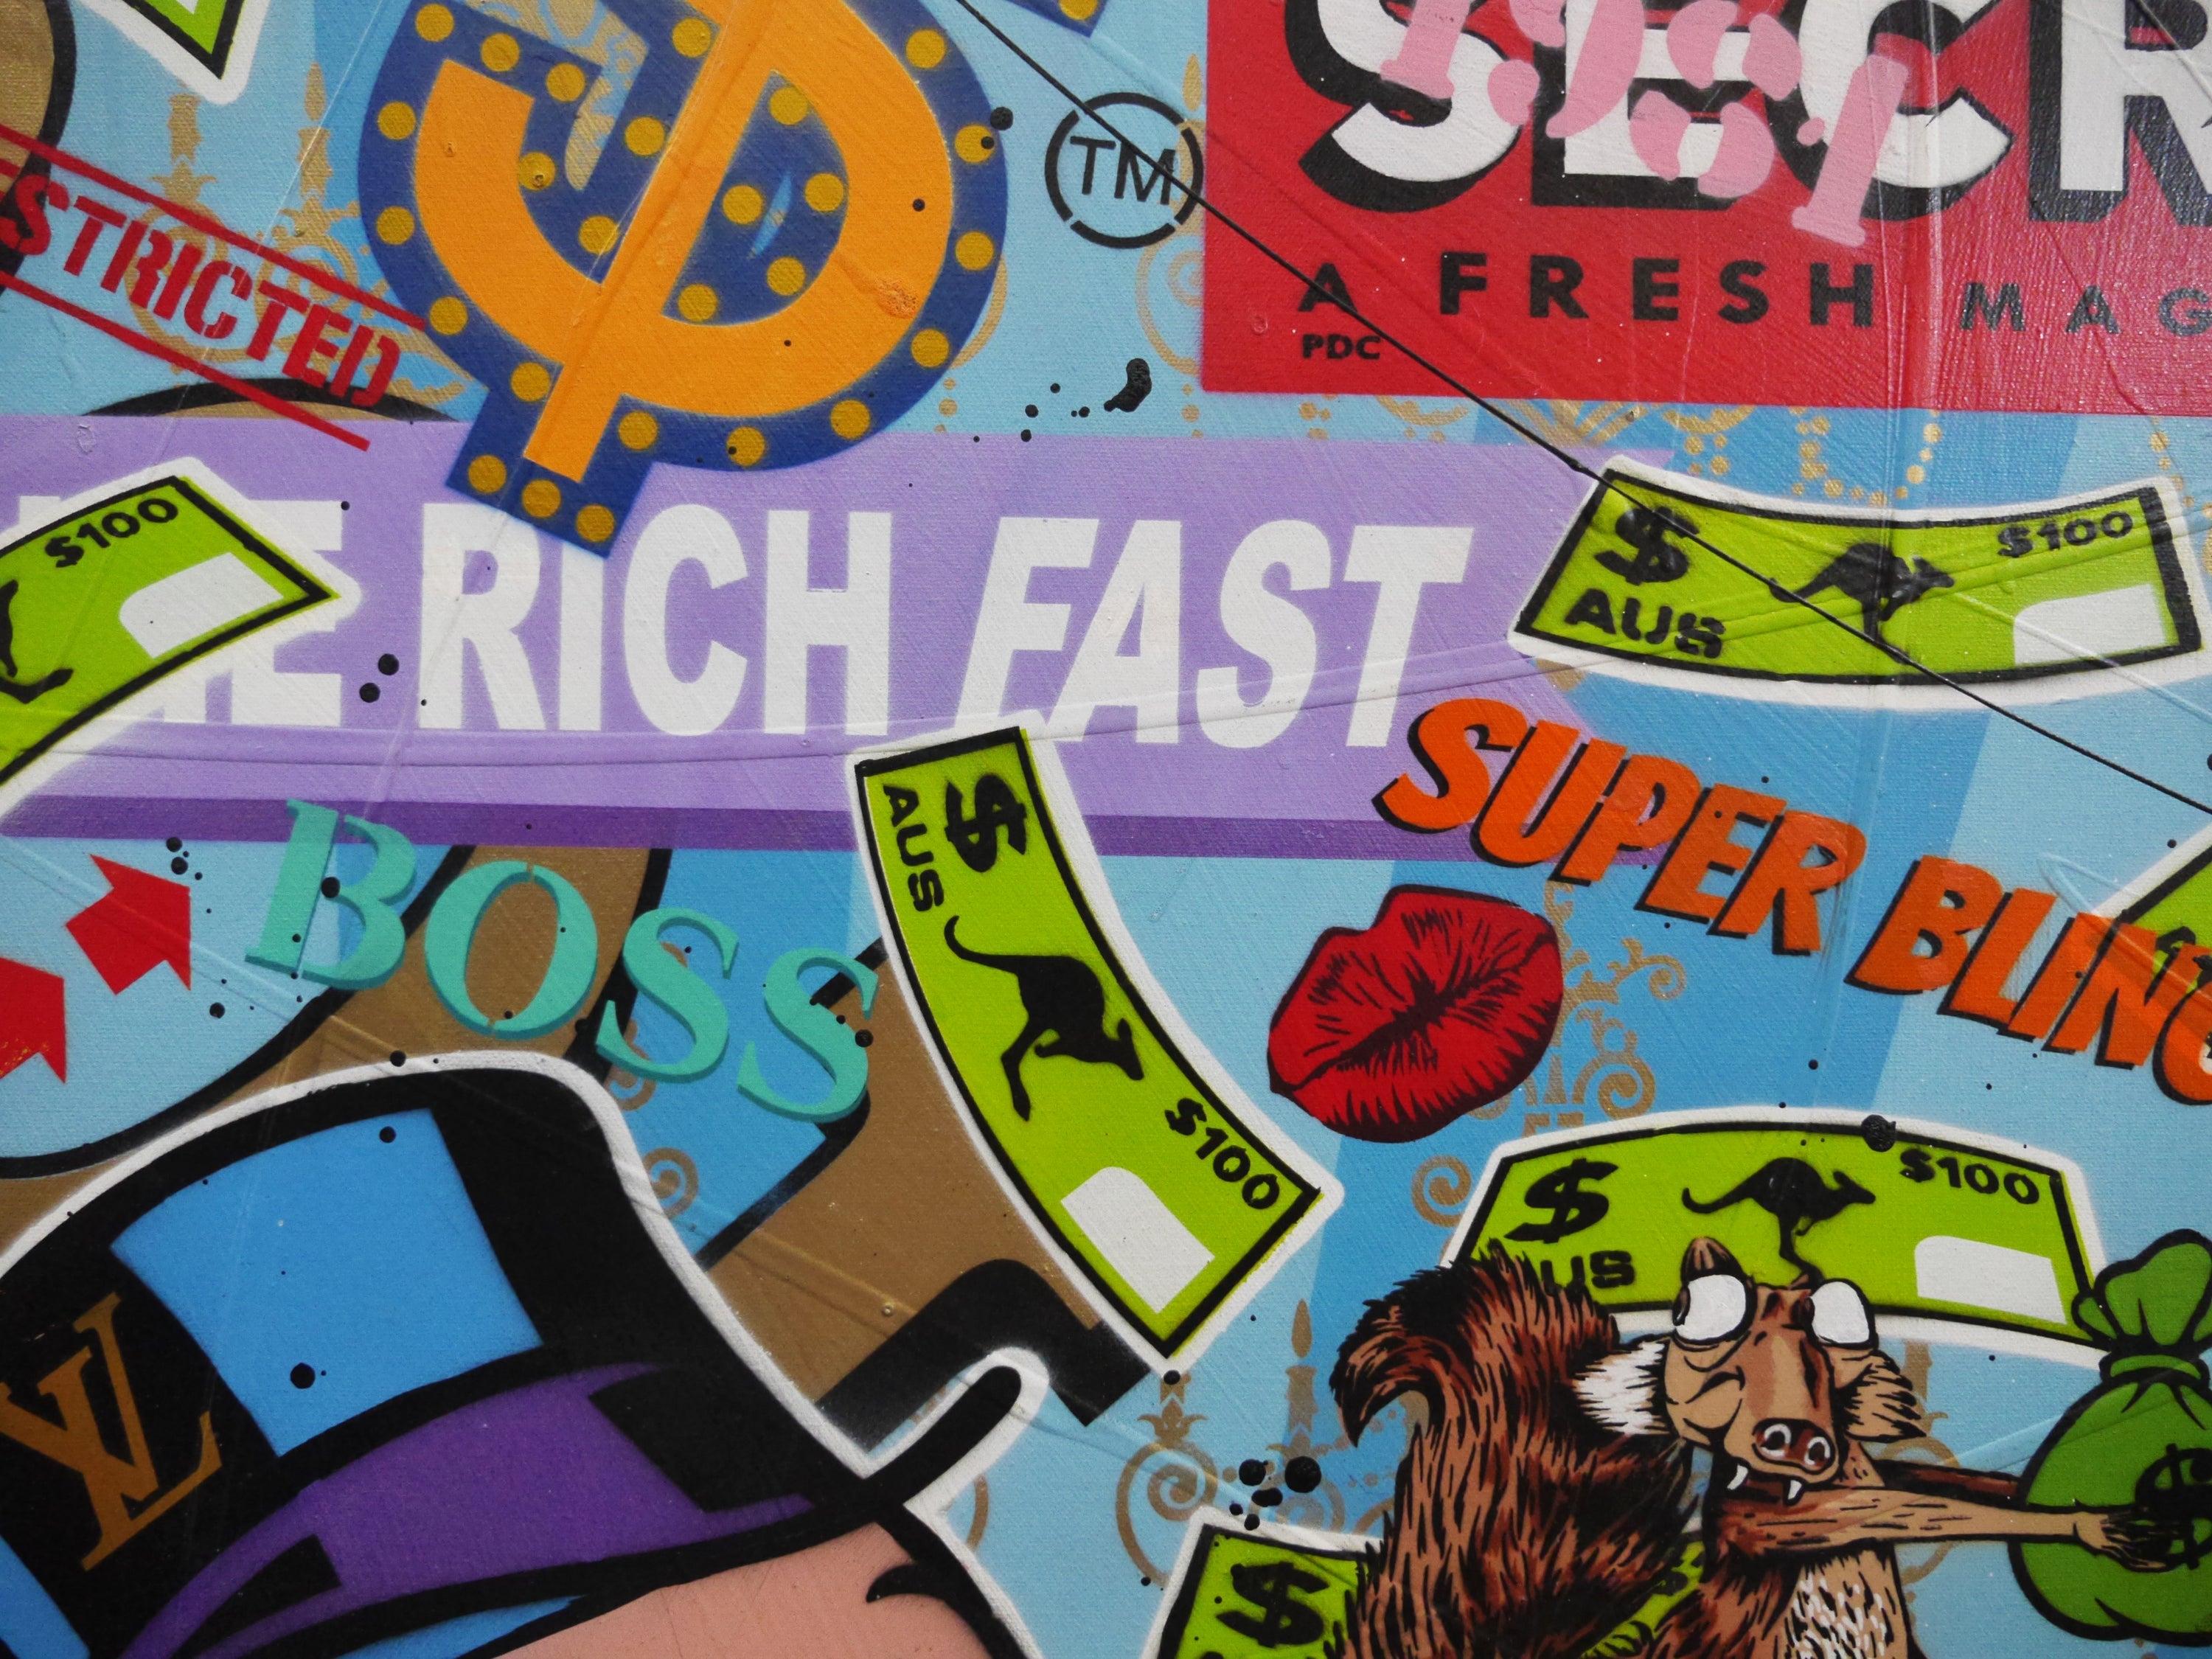 Money Bags 120cm x 150cm Monopoly Man Textured Urban Pop Art Painting (SOLD)